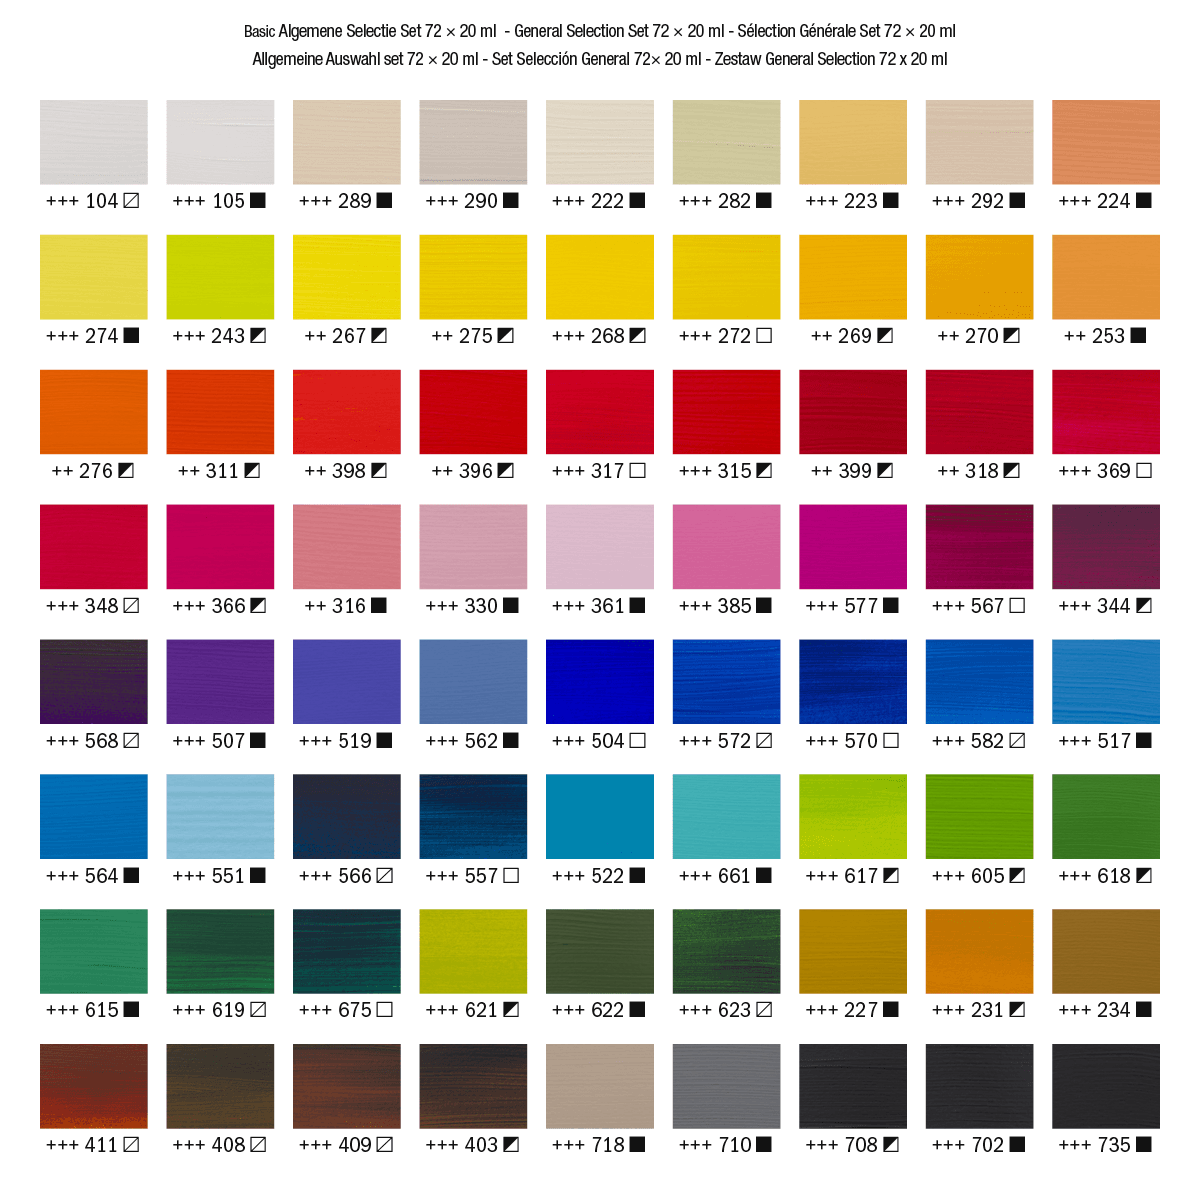 Amsterdam Standard Acrylic Paint Set: 12 Colors